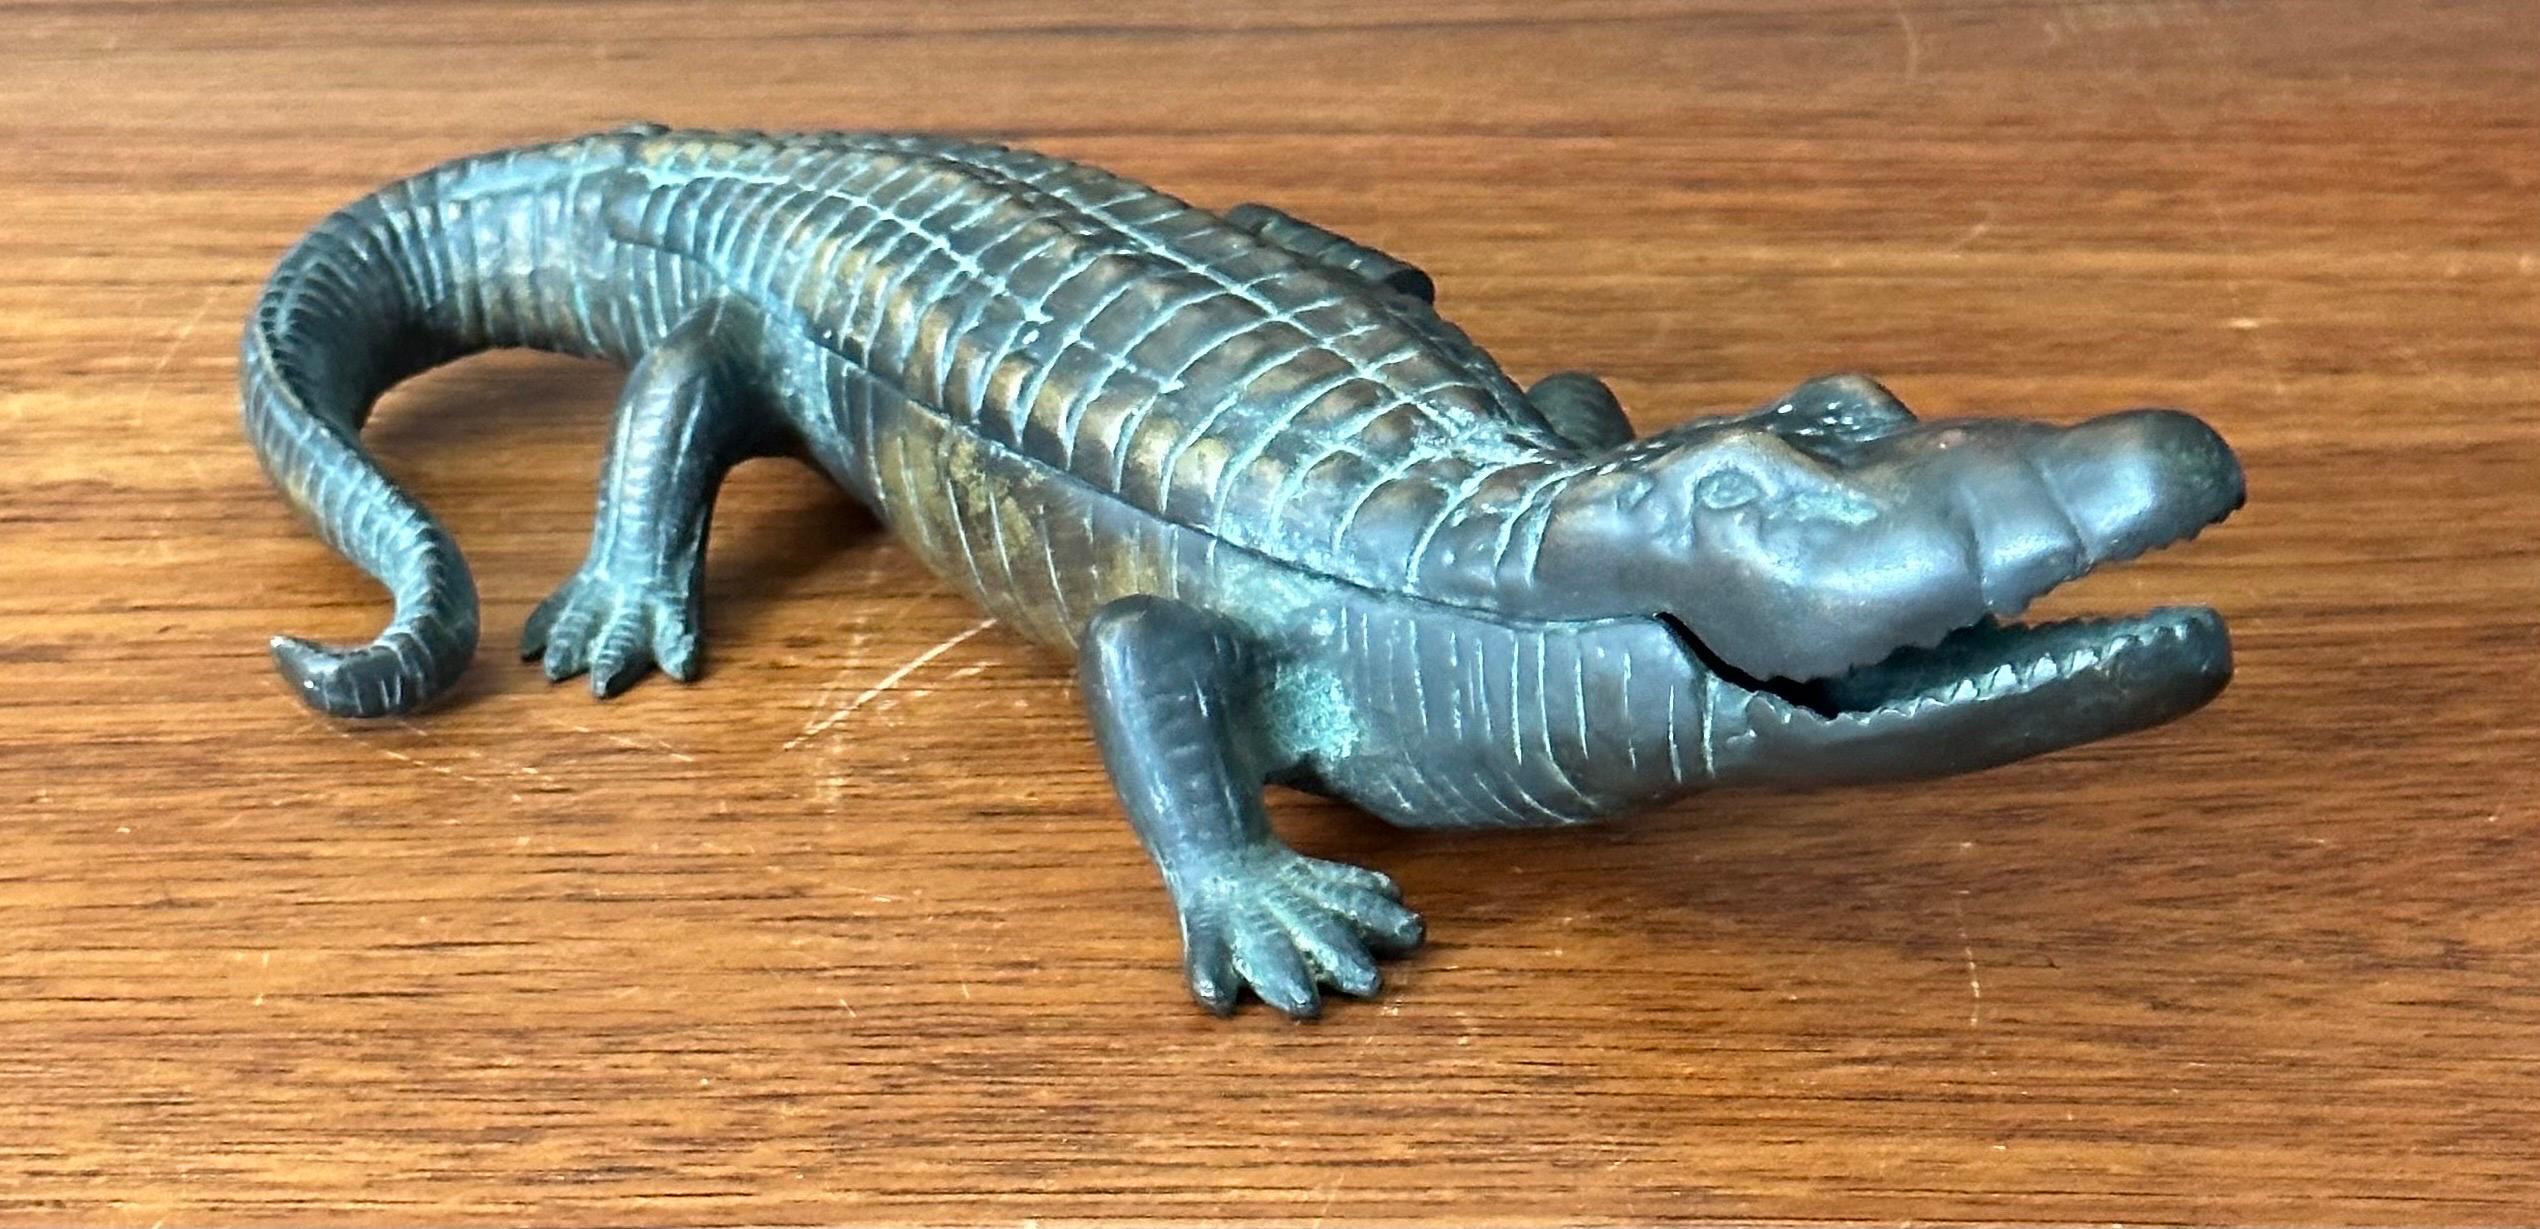 arthur the alligator